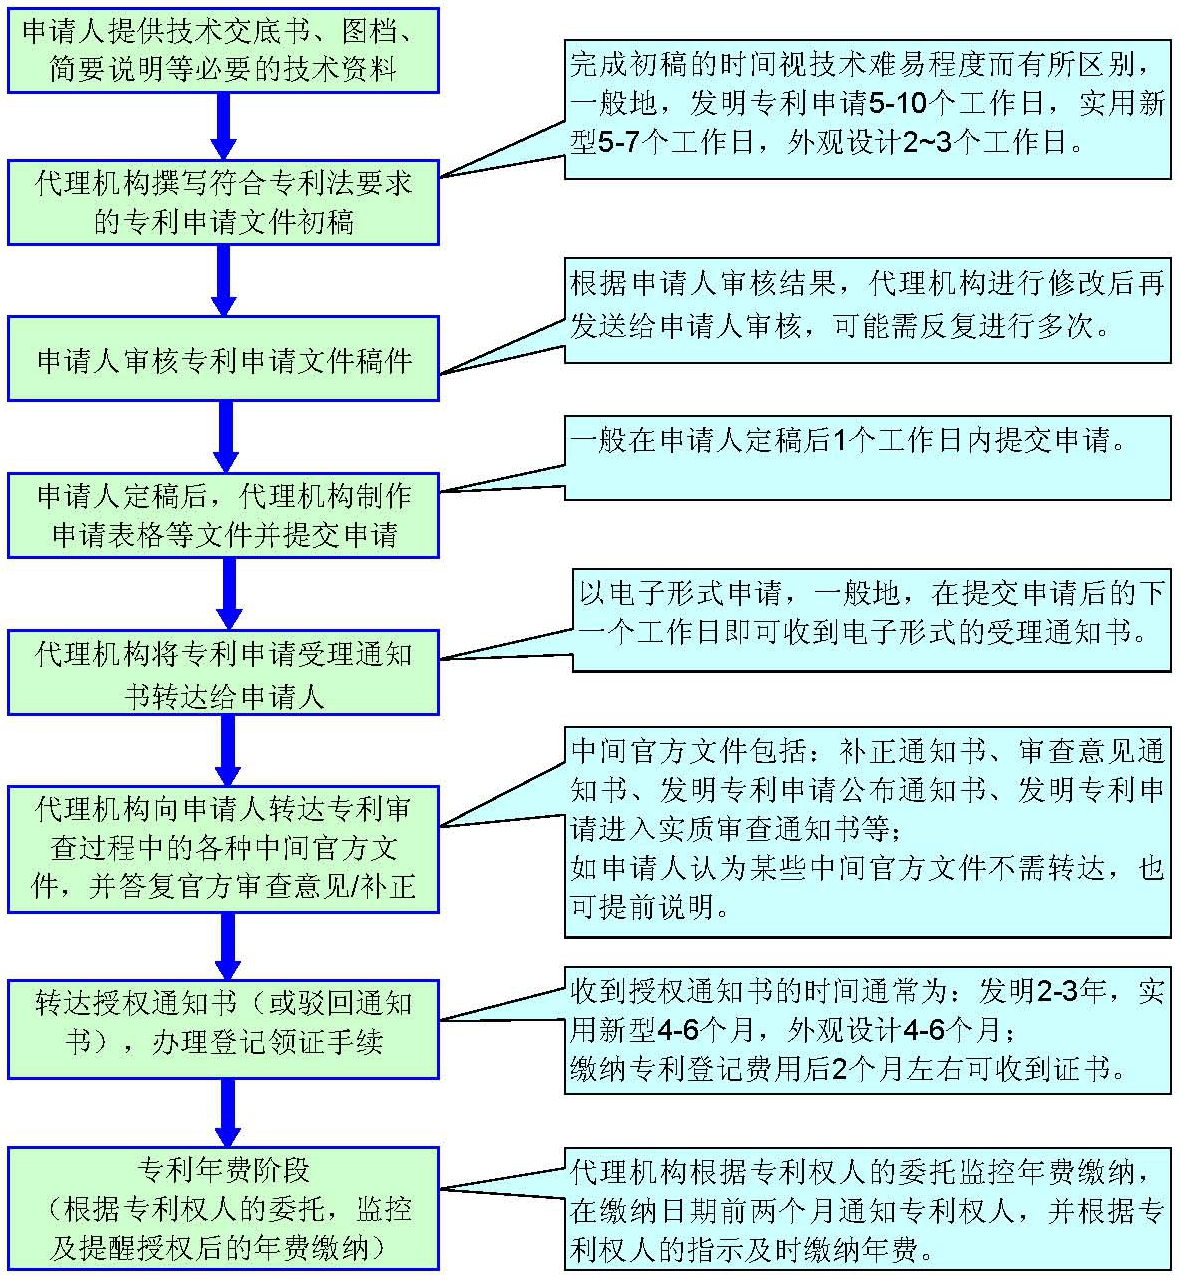 QP1501中国专利申请所需资料及流程简介（公用）.jpg